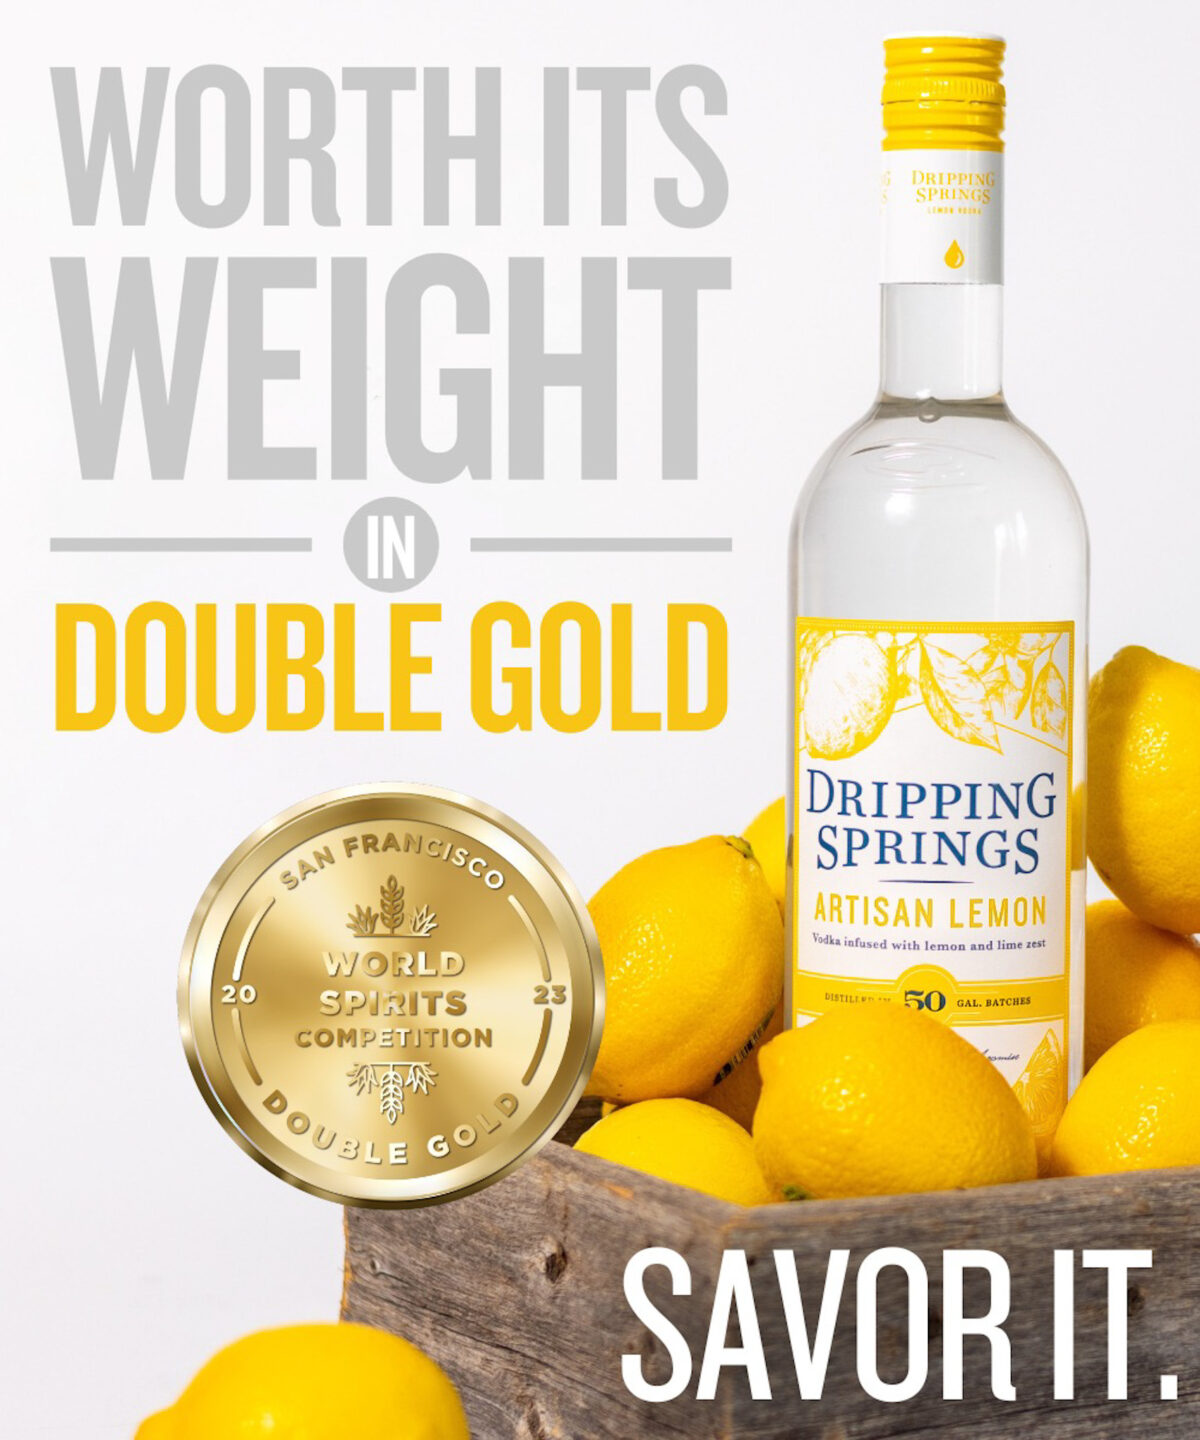 Artisan Lemon Vodka Wins Double Gold